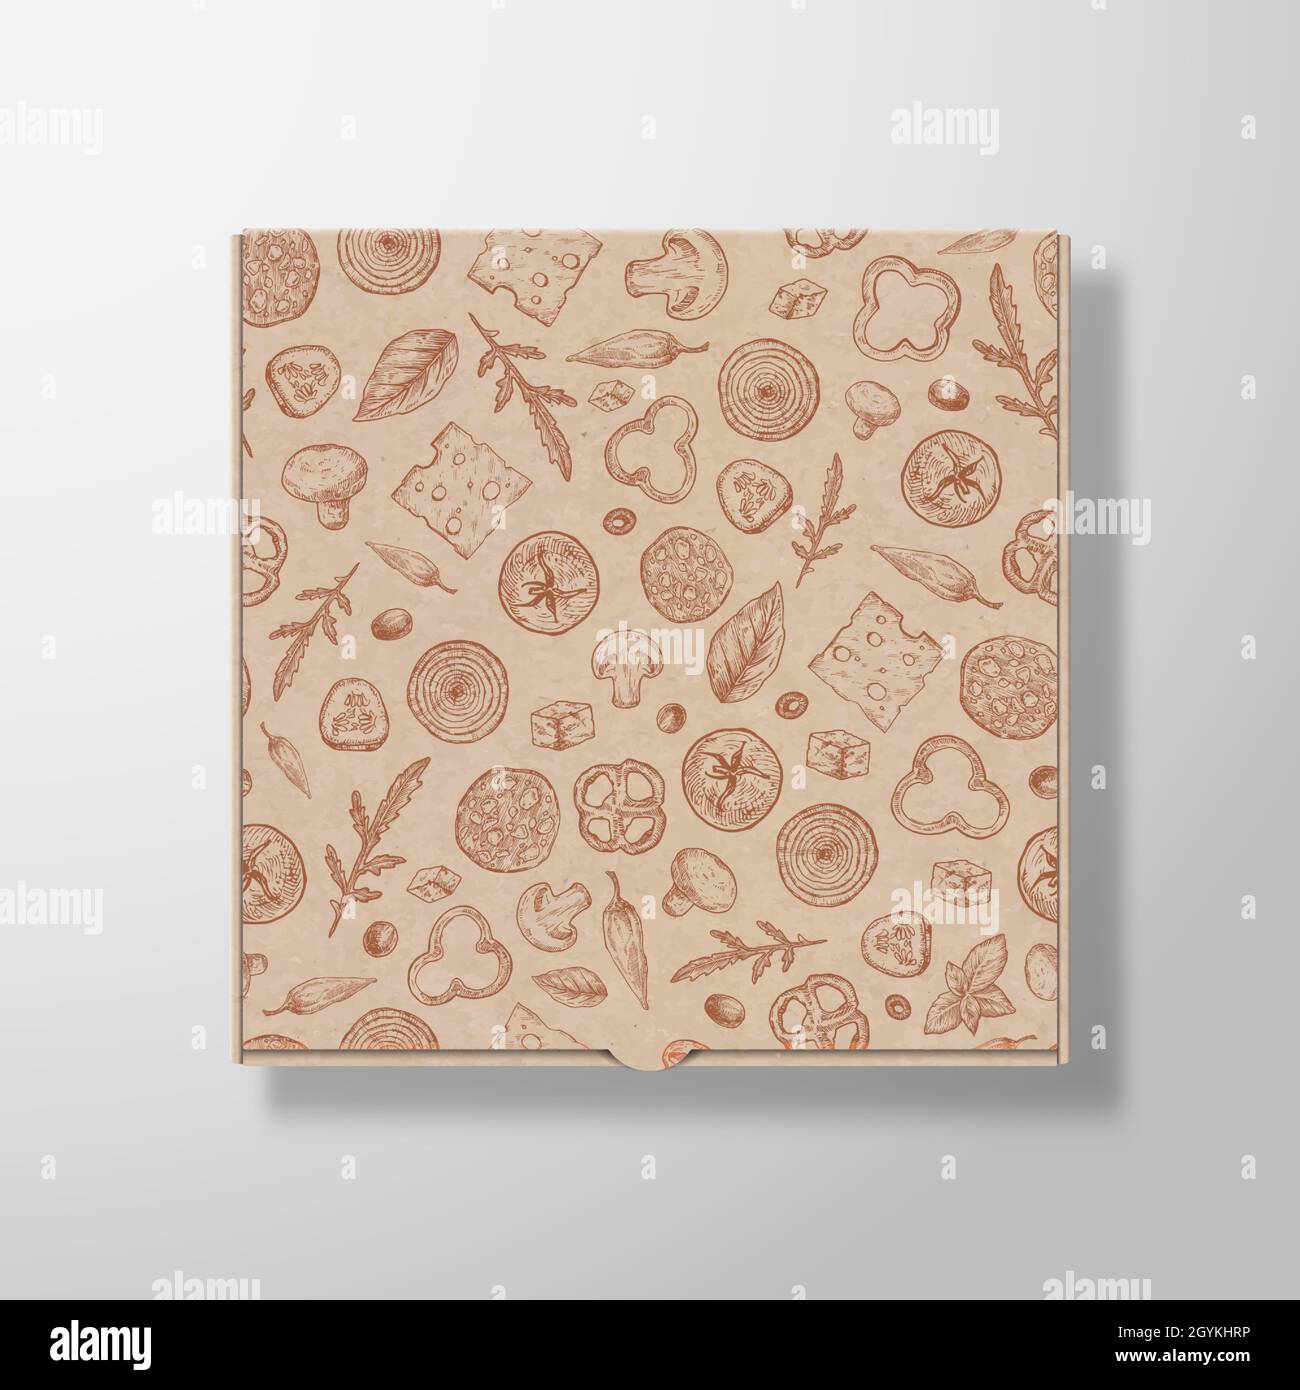 Pizza Box, 12', 14', Custom Size, Corrugated and White Cardboard Pizza  Boxes, Customized/Printed Logo Pattern, Insulation/Handle Design - China  Pizza Box, Pizza Boxes